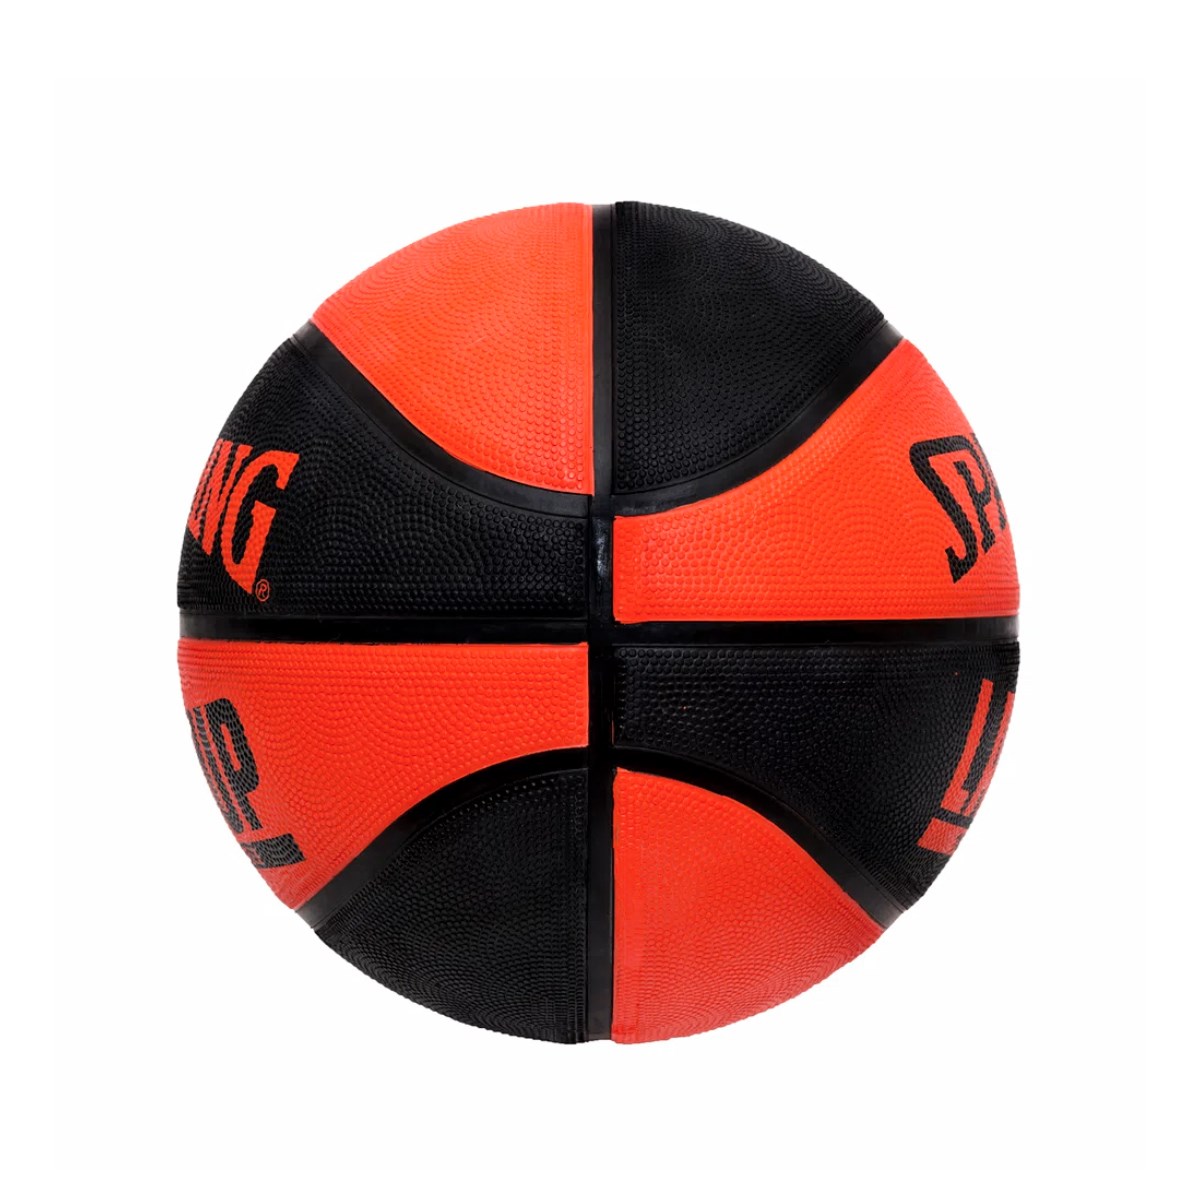 Bola de Basquete Spalding Streetball - Tamanho 7